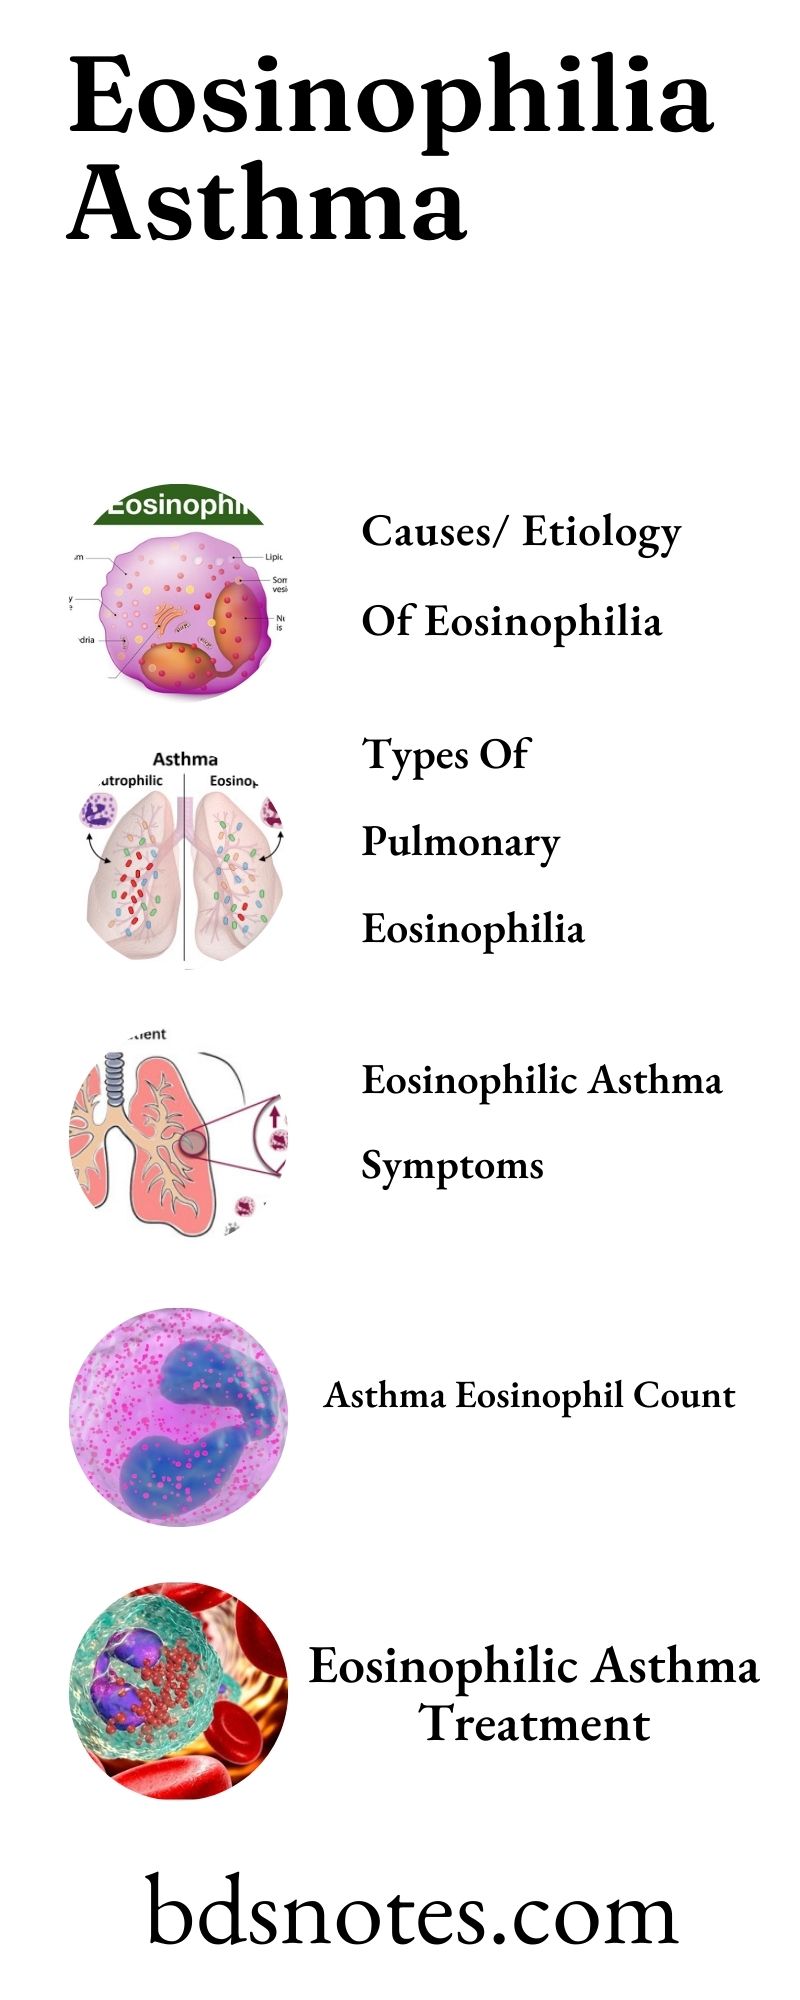 Eosinophilia Asthma Treatment